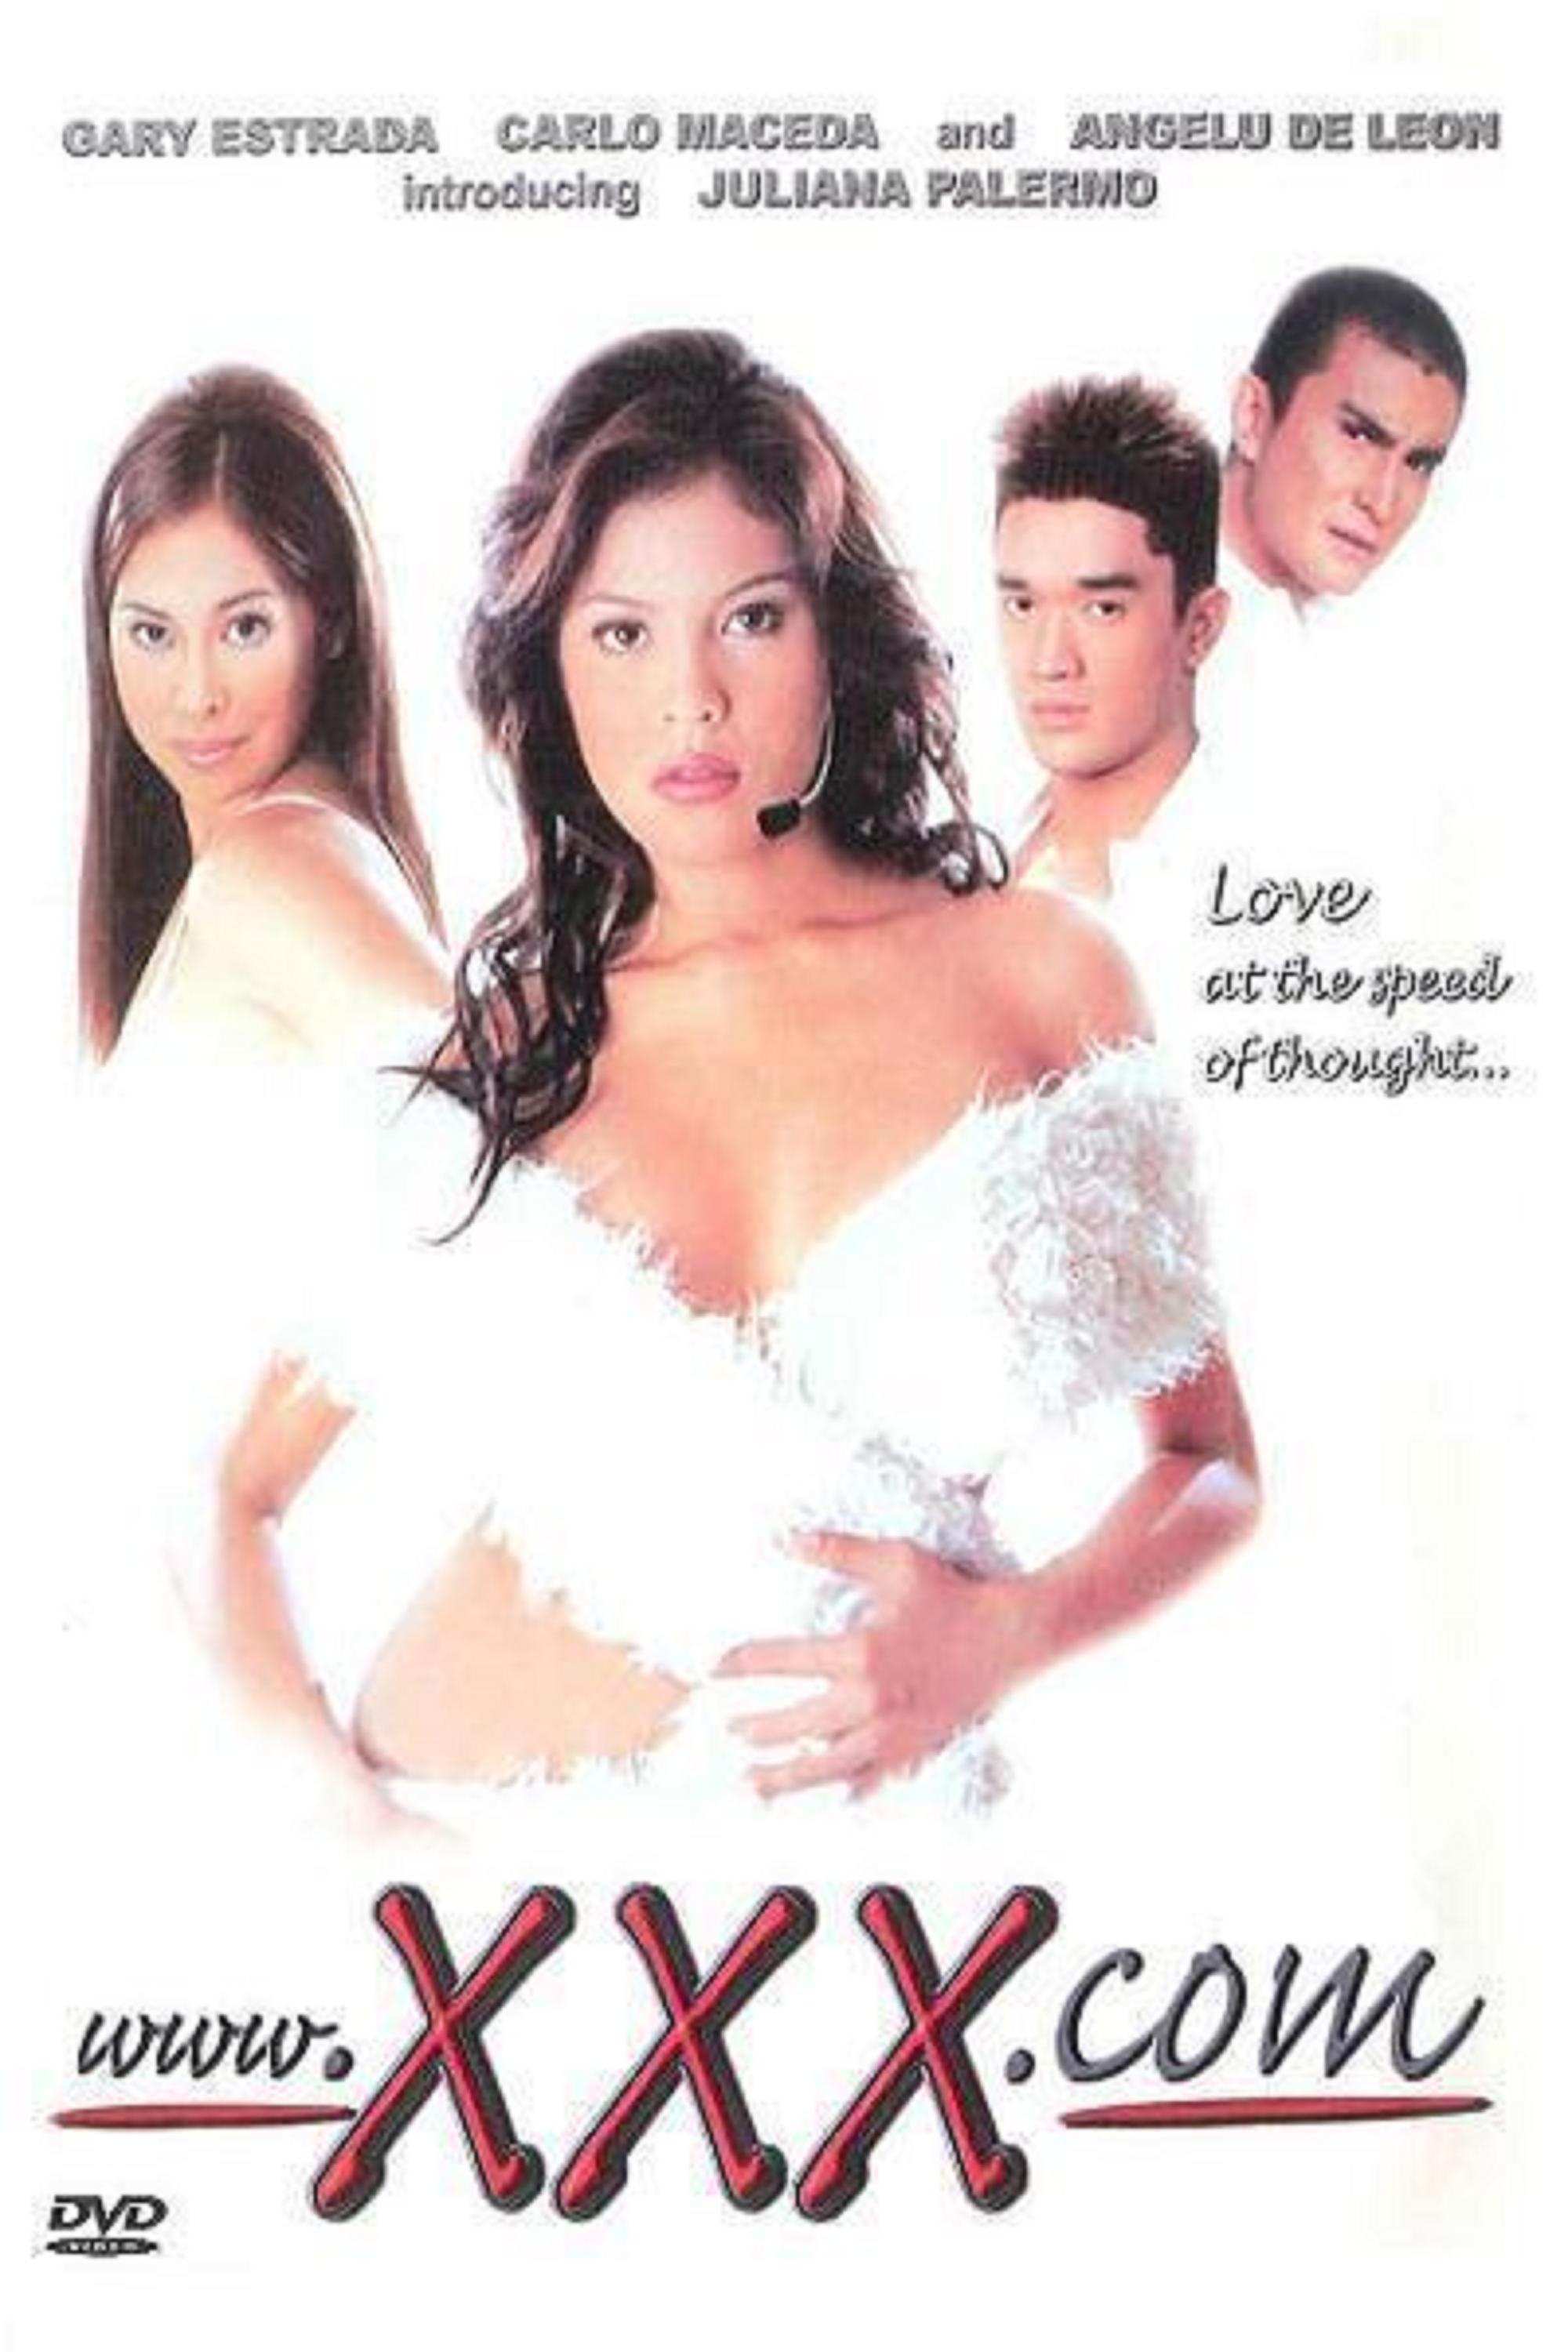 www.XXX.com (2003) with English Subtitles on DVD on DVD